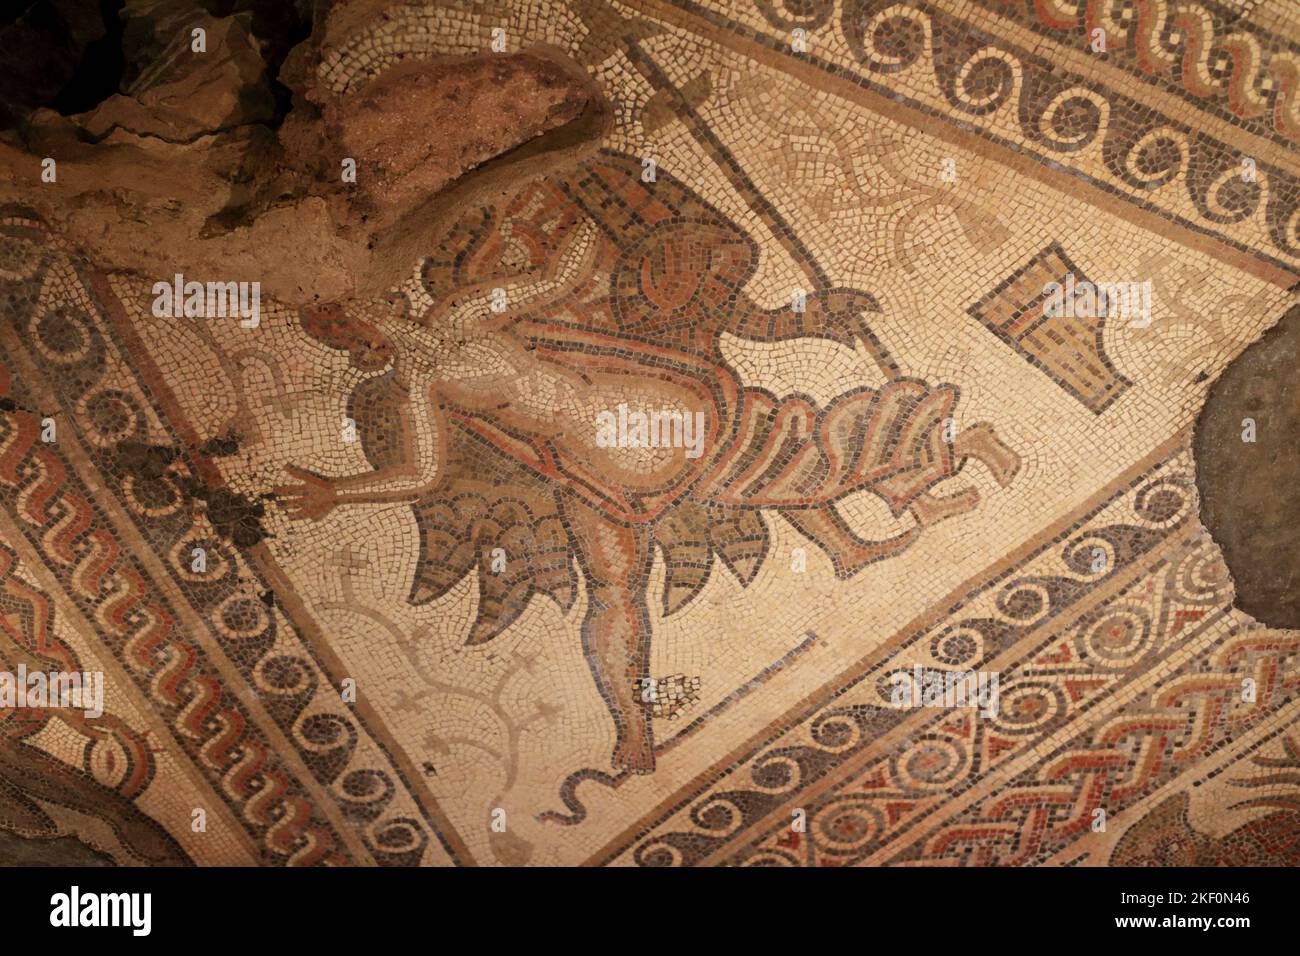 Mosaics at Chedworth Roman villa, Yanworth, Cheltenham, Gloucestershire, England, UK. Stock Photo